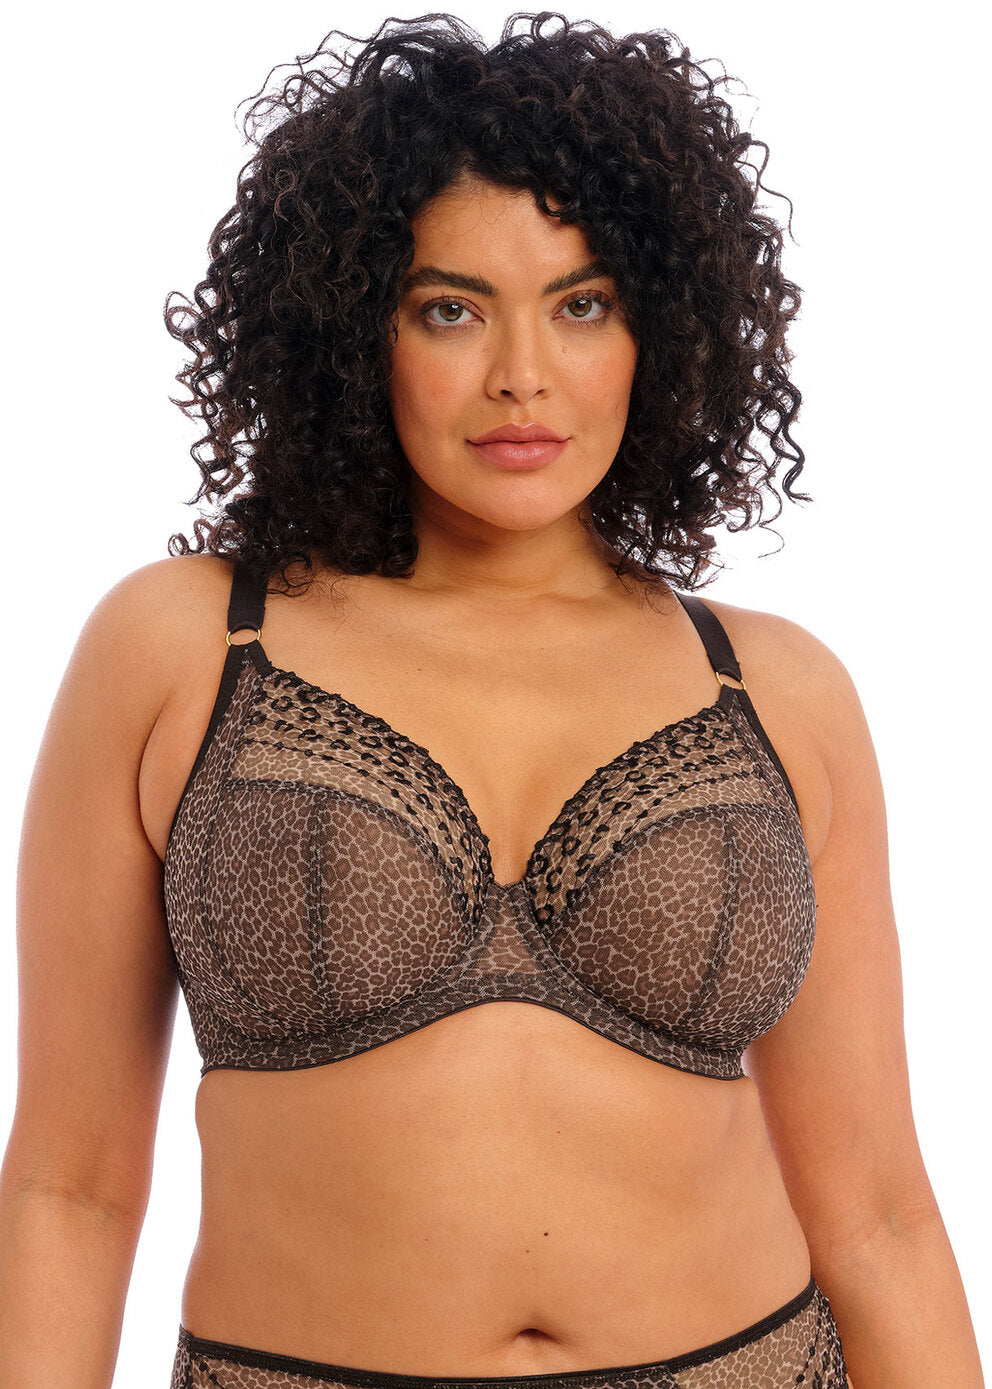 Model wears the Elomi Matilda bra in Leopard print.